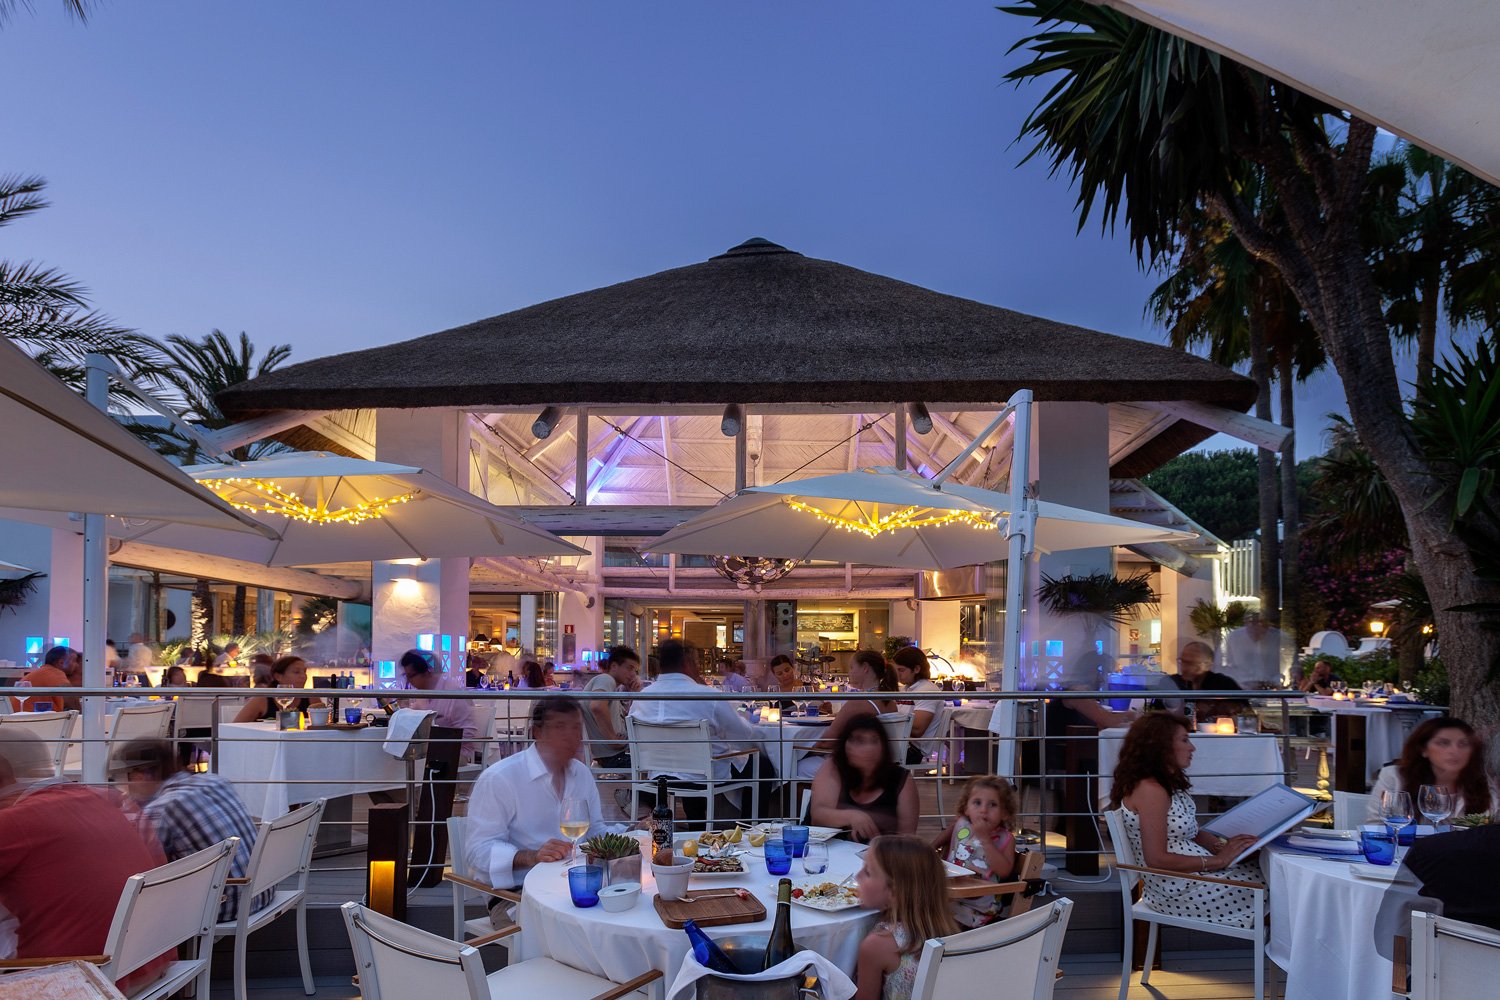 Cape Reed International Twitterissä: "Dinner served at the beautiful Sea Grill Restaurant @ Hotel Puente Romano in Marbella! #bonappetit #alfrescodining #whitewashed #thatchedrestaurant #summerinspain #summernights https://t.co/BhbQRjIEYg" / Twitter